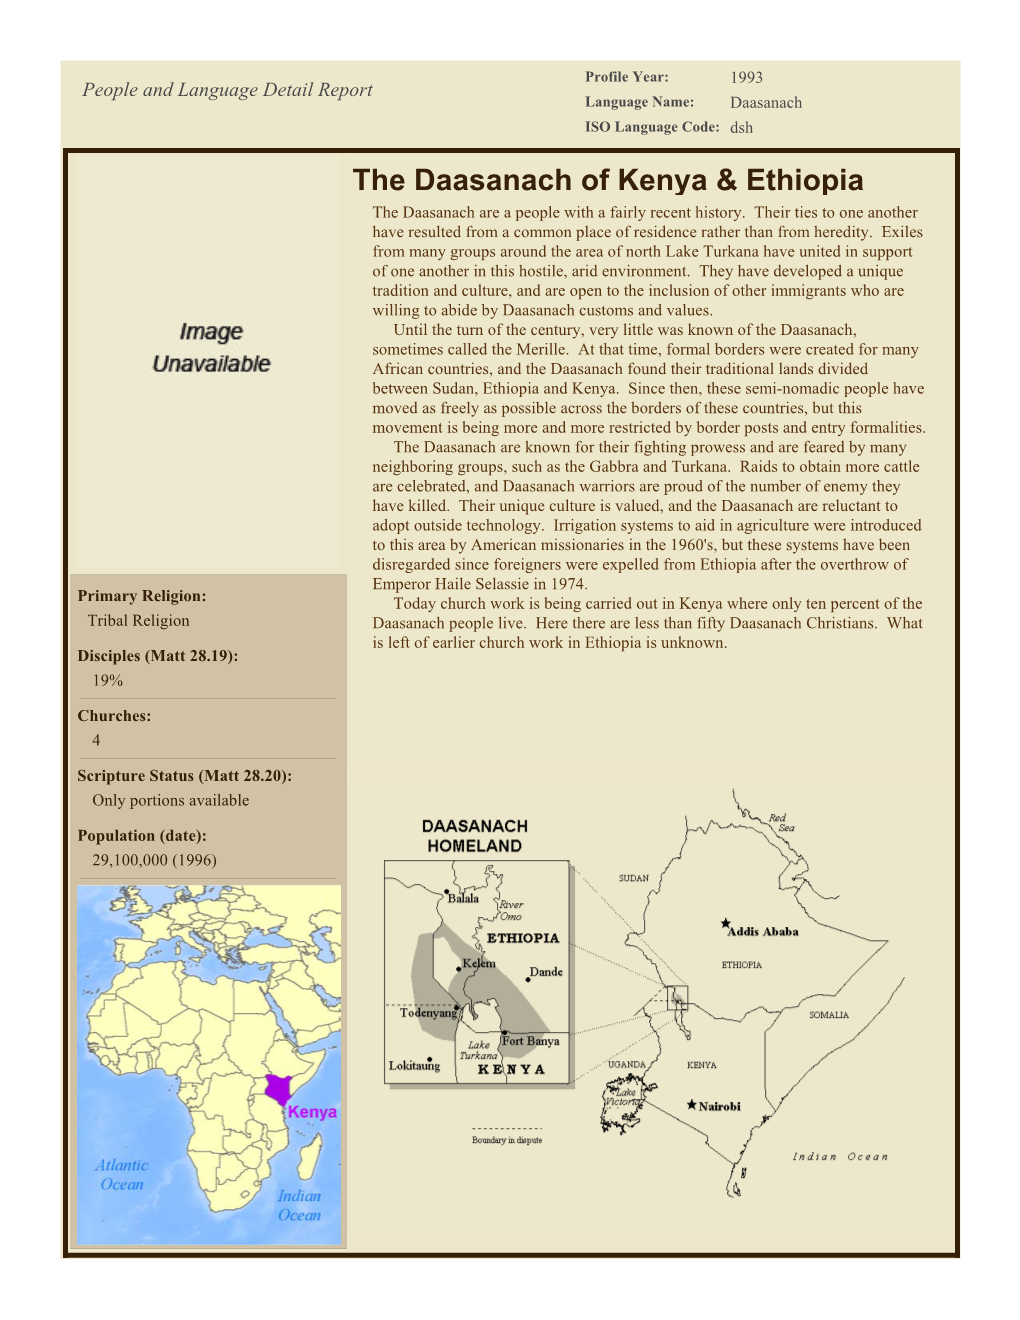 The Daasanach of Kenya & Ethiopia